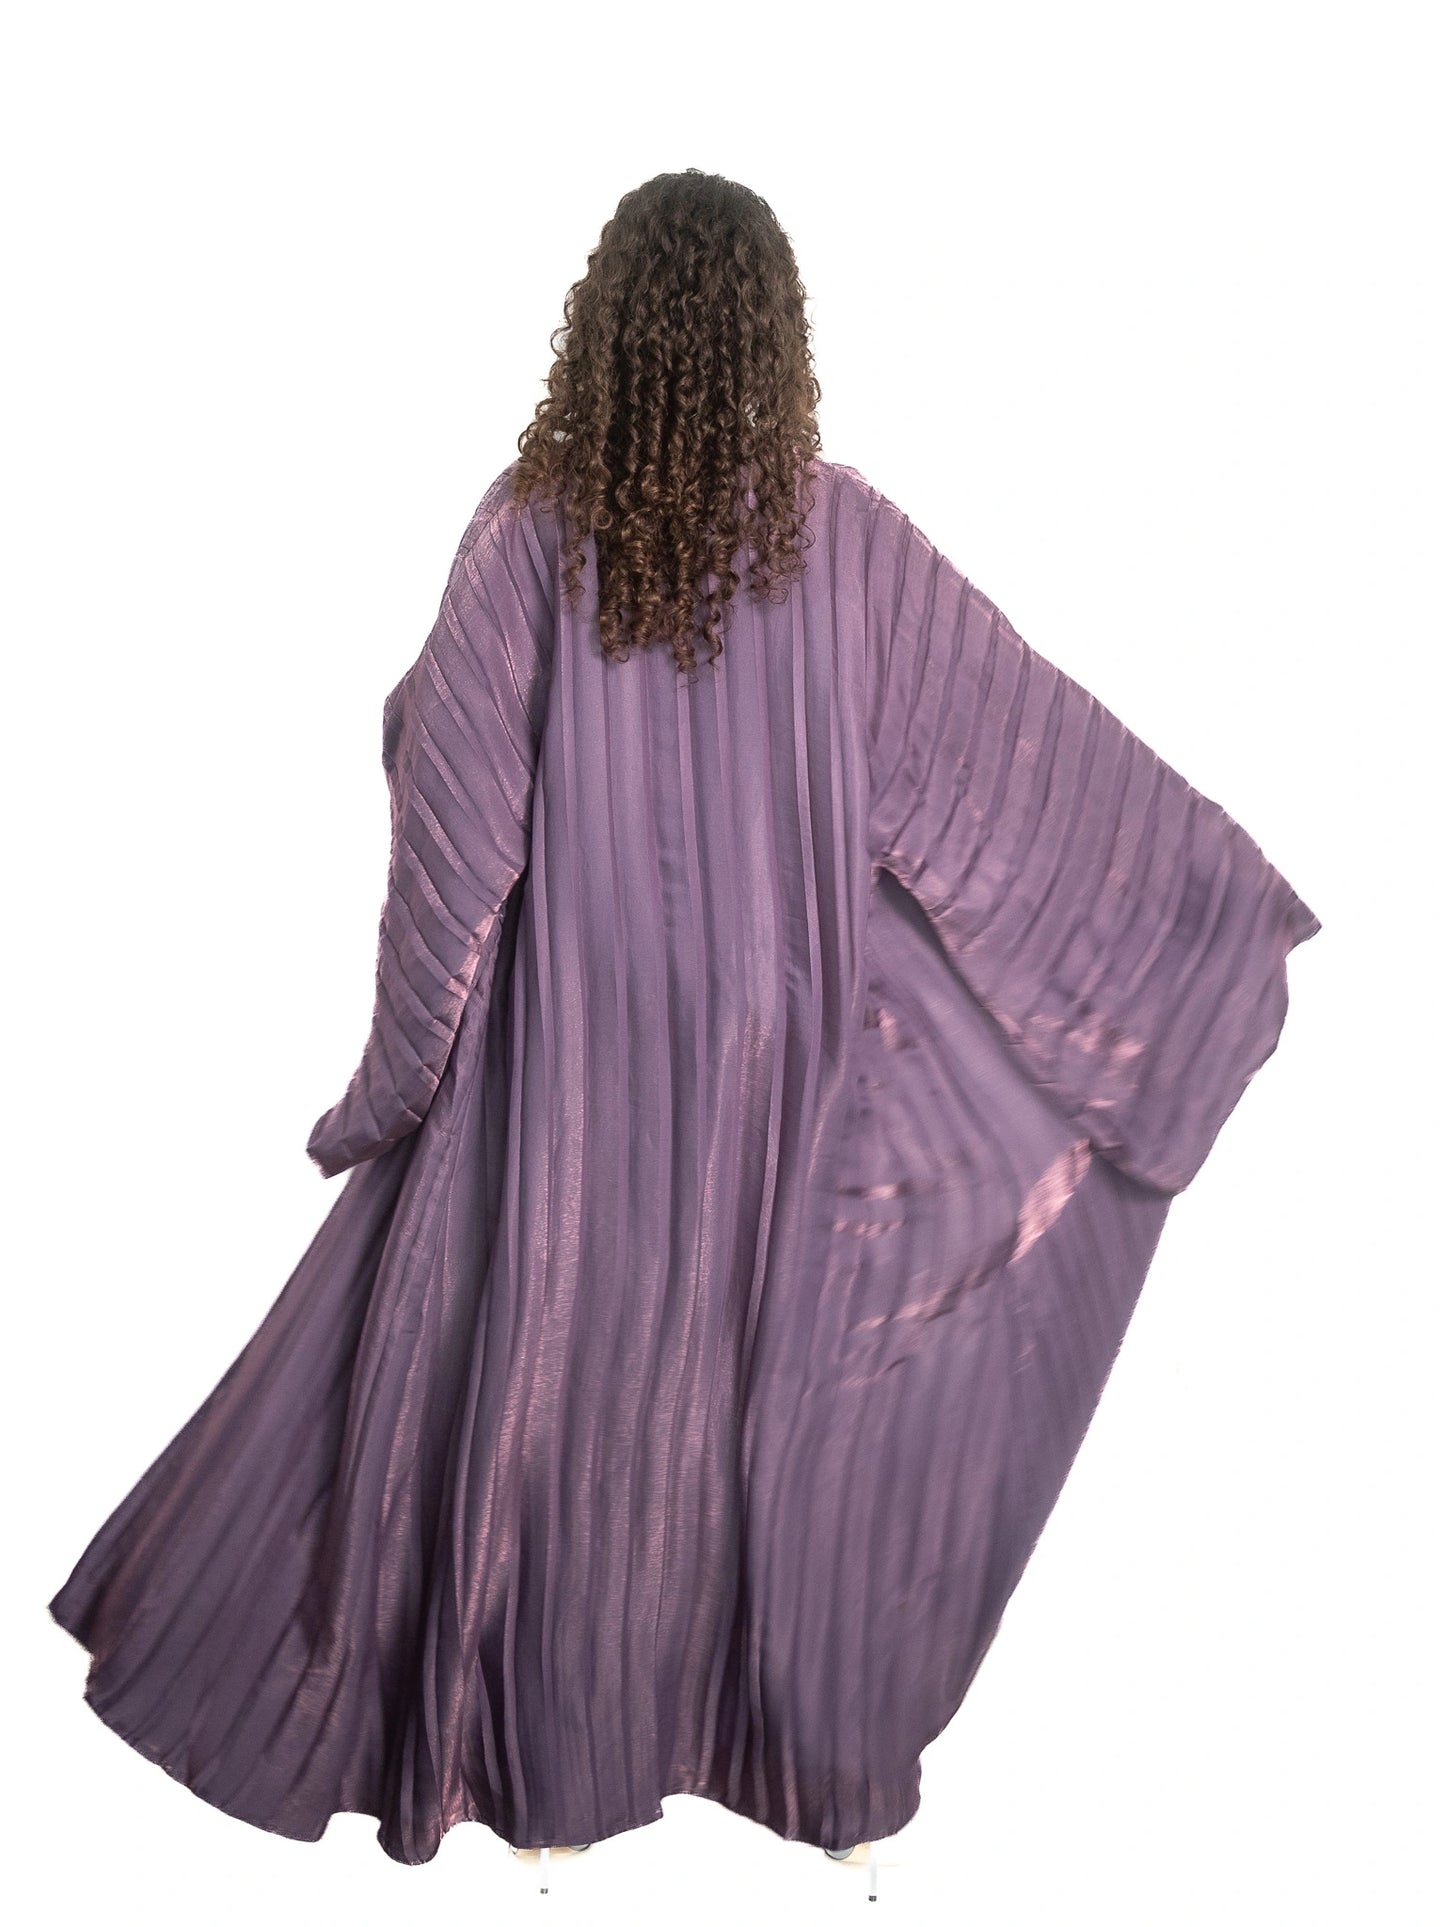 Metallic Purple abaya with Hijab